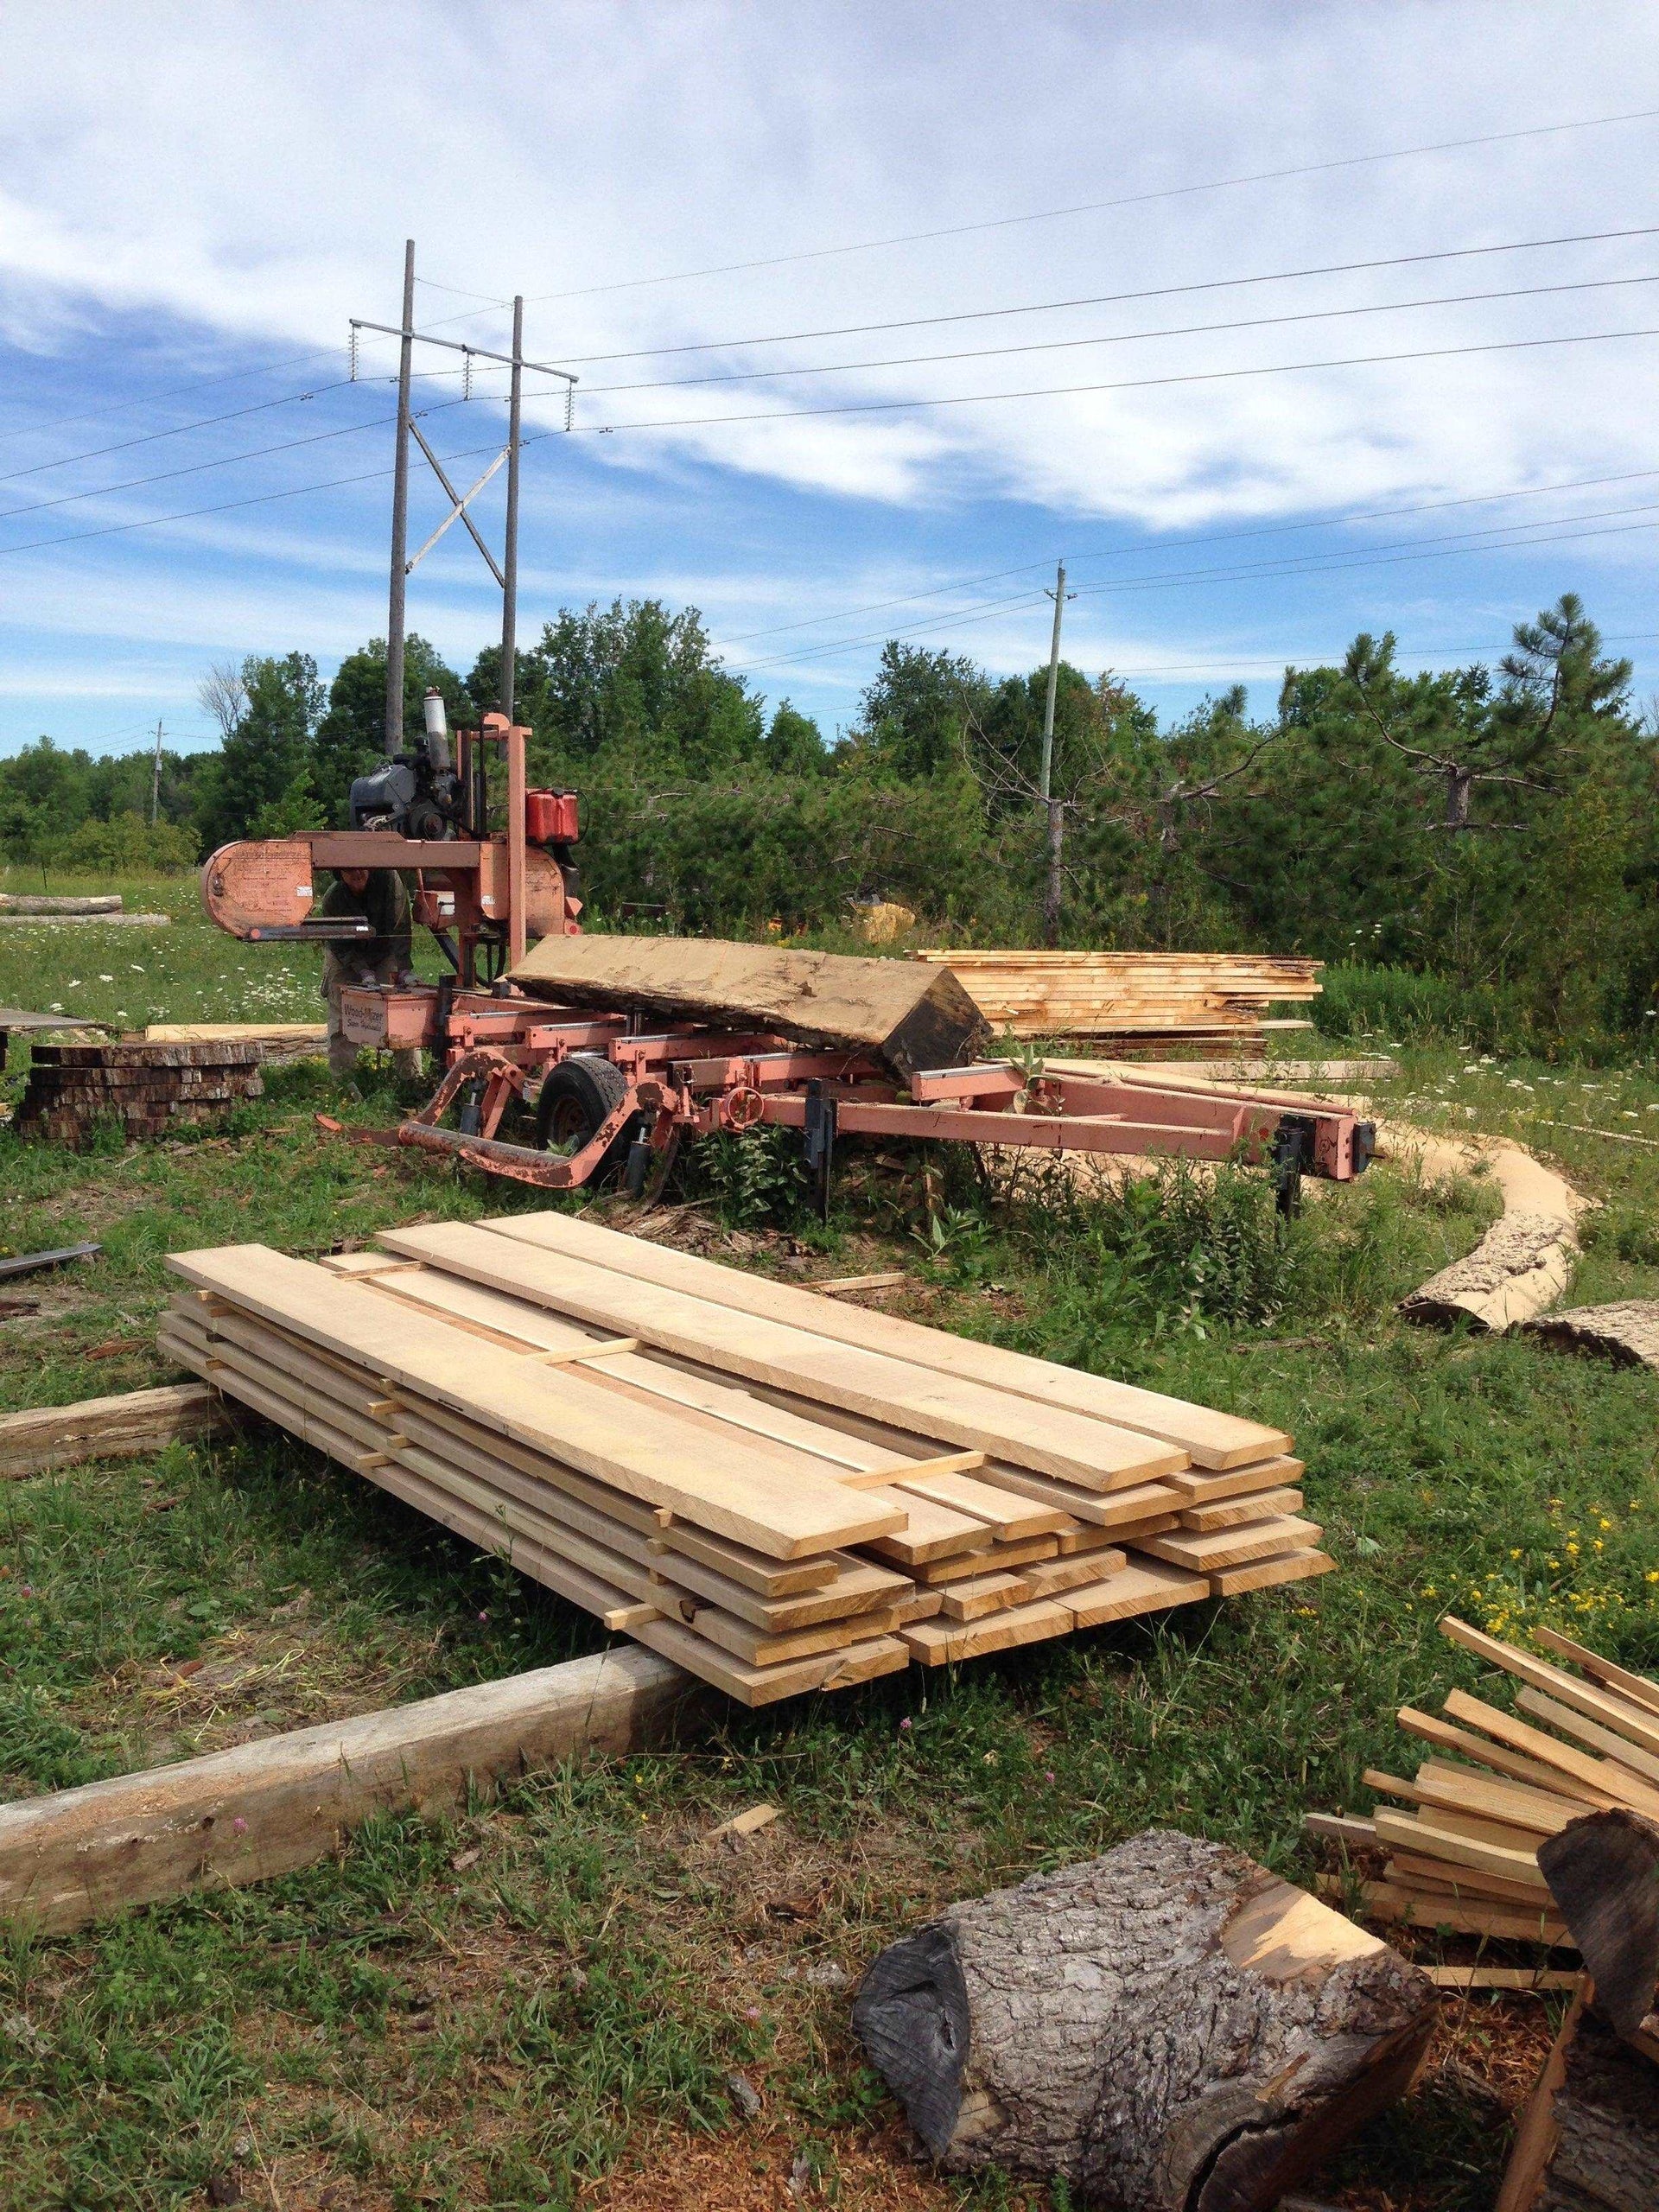 New Canadian Oak Barrels - The County Cooperage